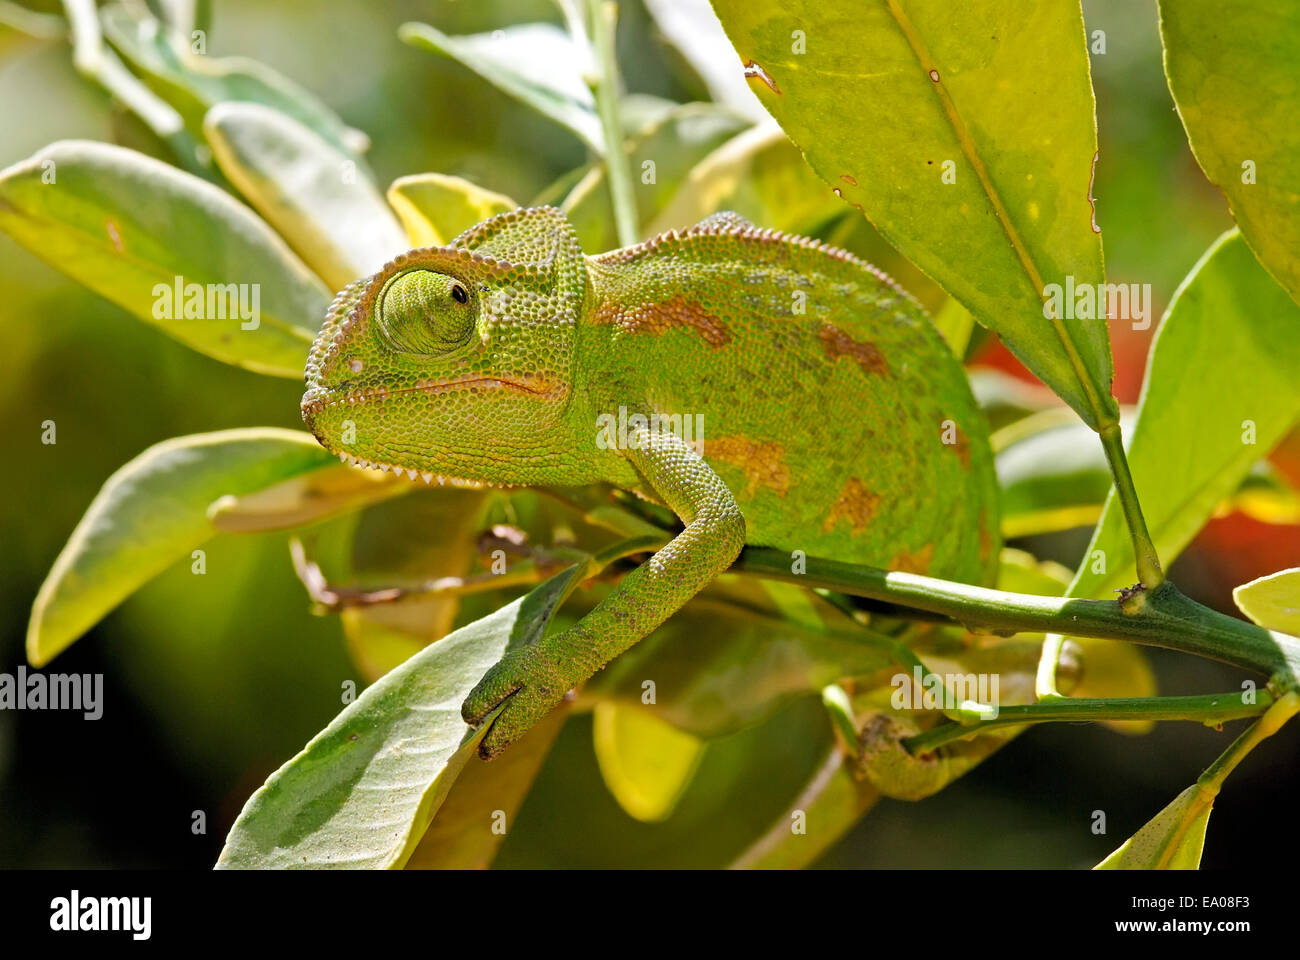 chameleon camouflage